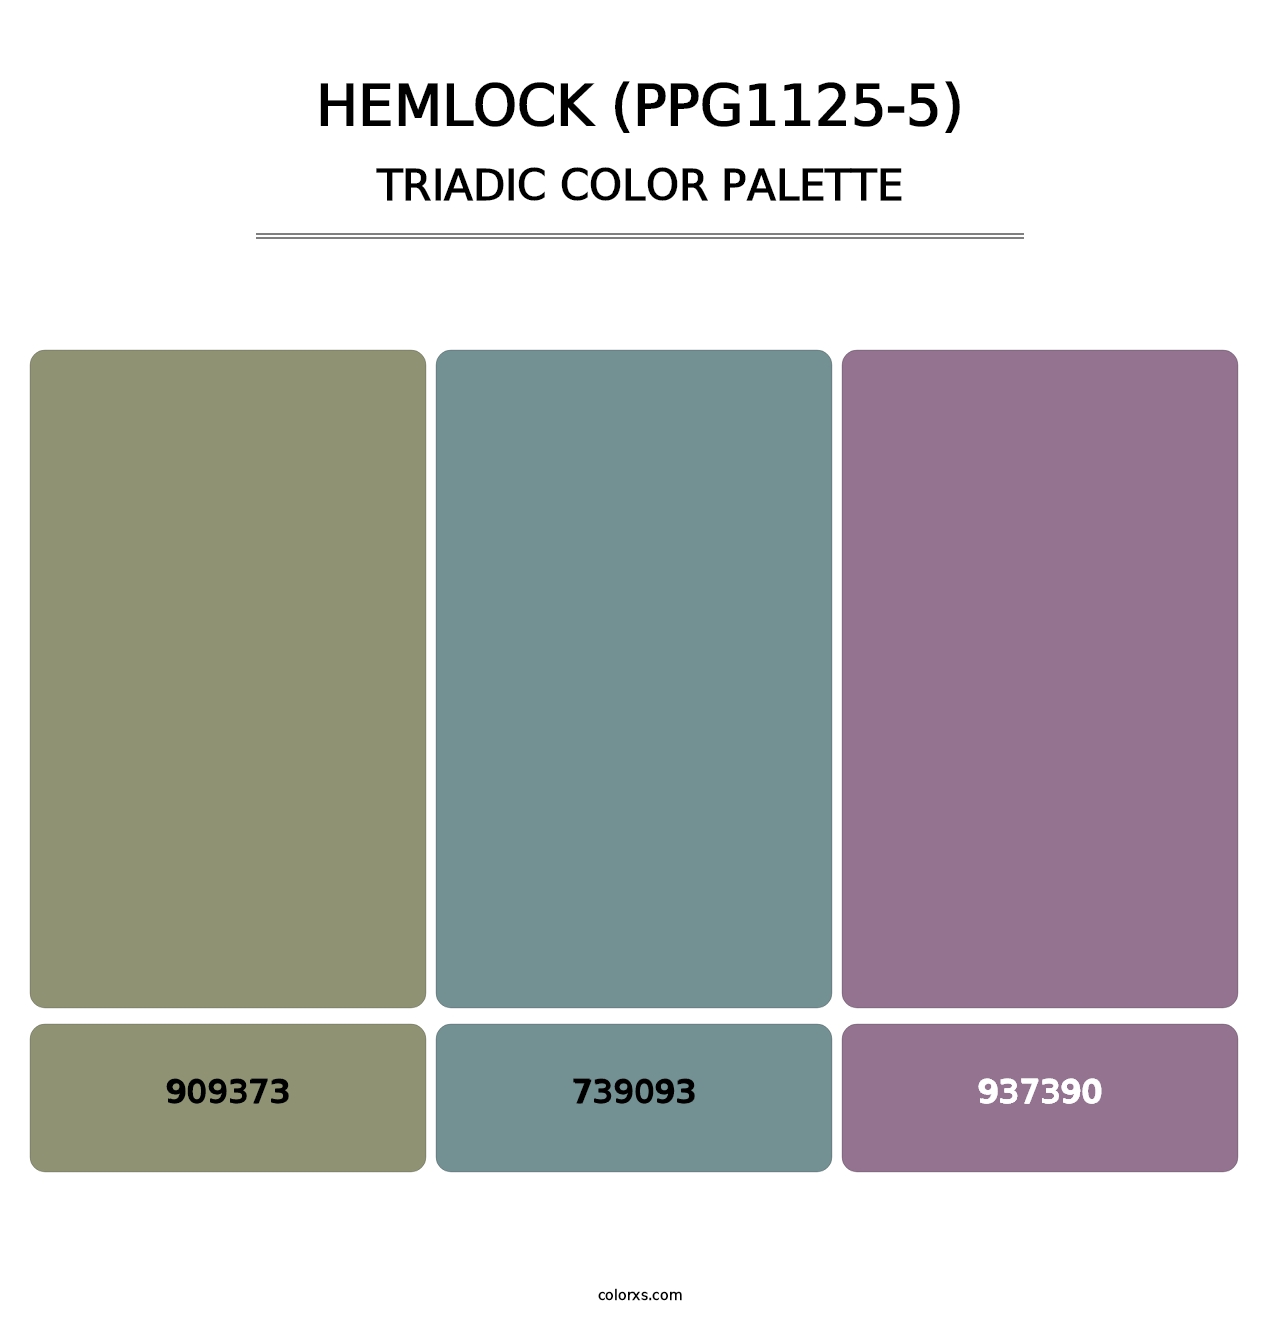 Hemlock (PPG1125-5) - Triadic Color Palette